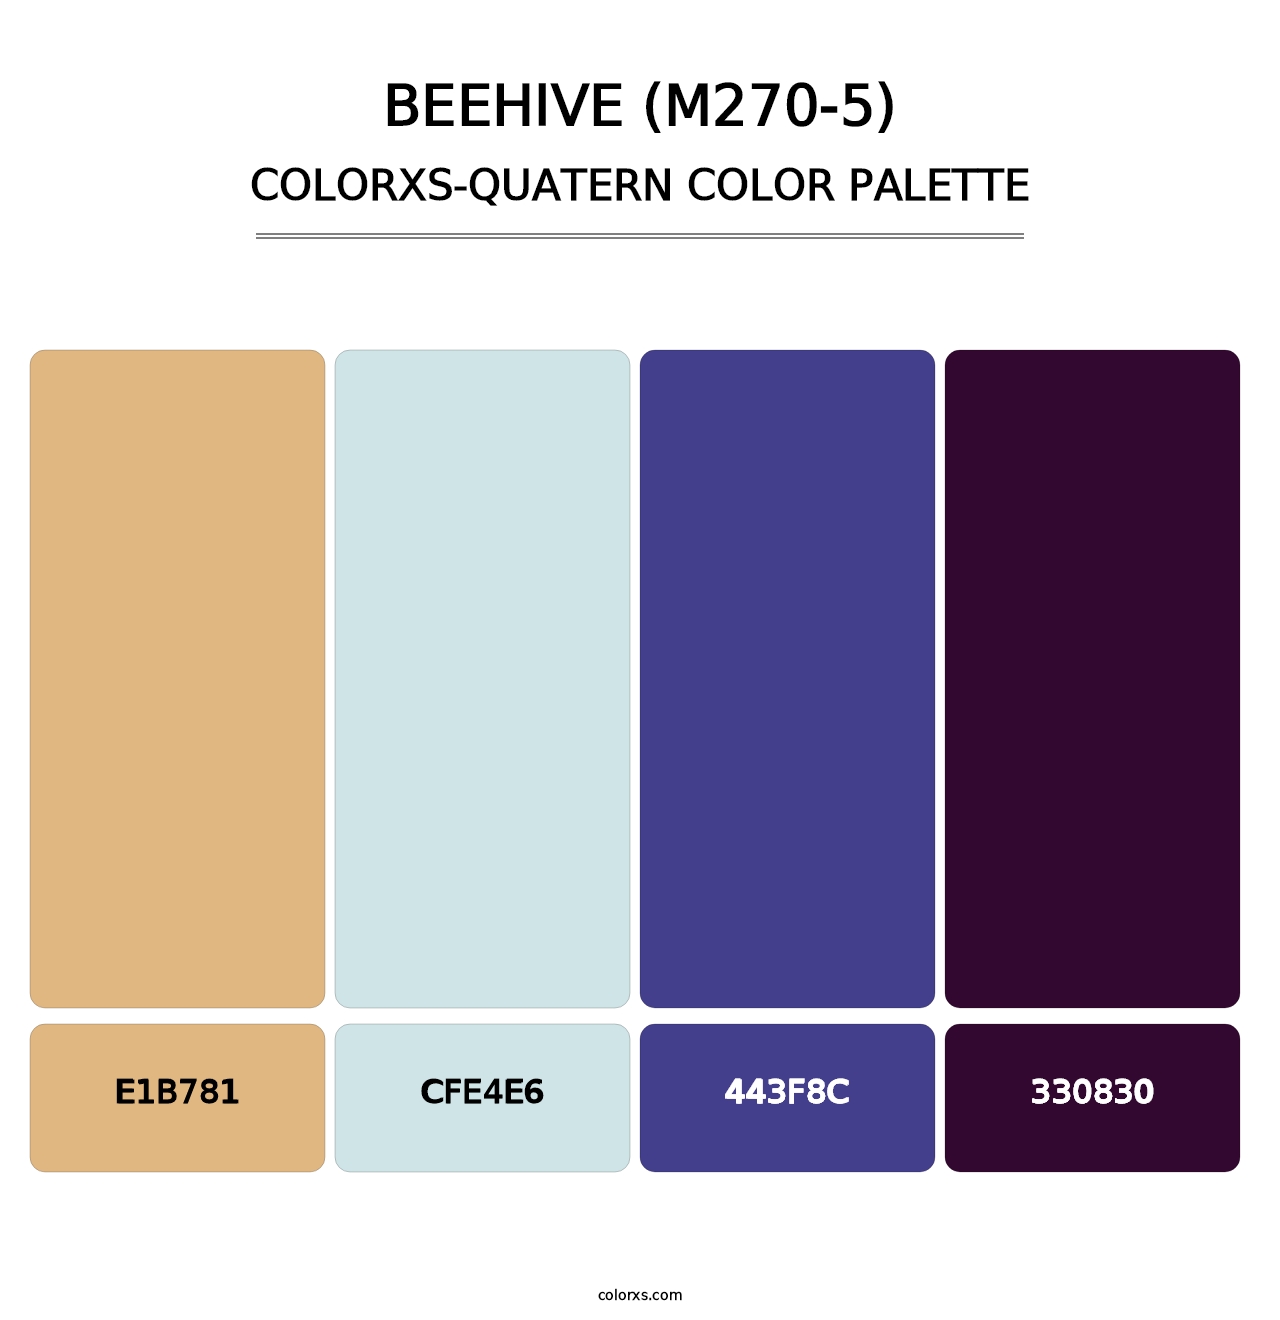 Beehive (M270-5) - Colorxs Quatern Palette